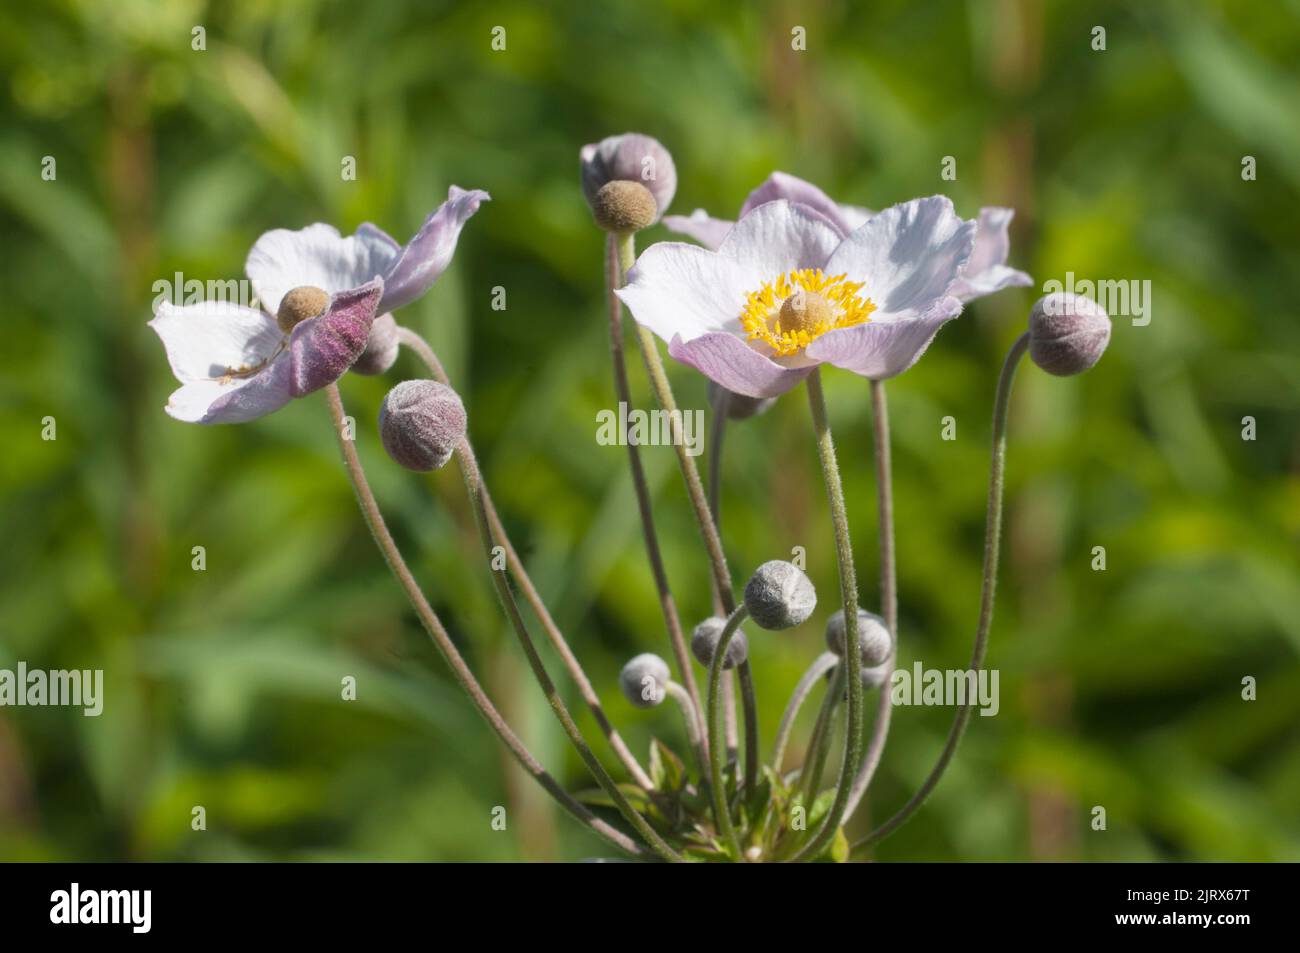 Japanese anemone (Eriocapitella hupehensis) flowers, close up shot, local focus Stock Photo